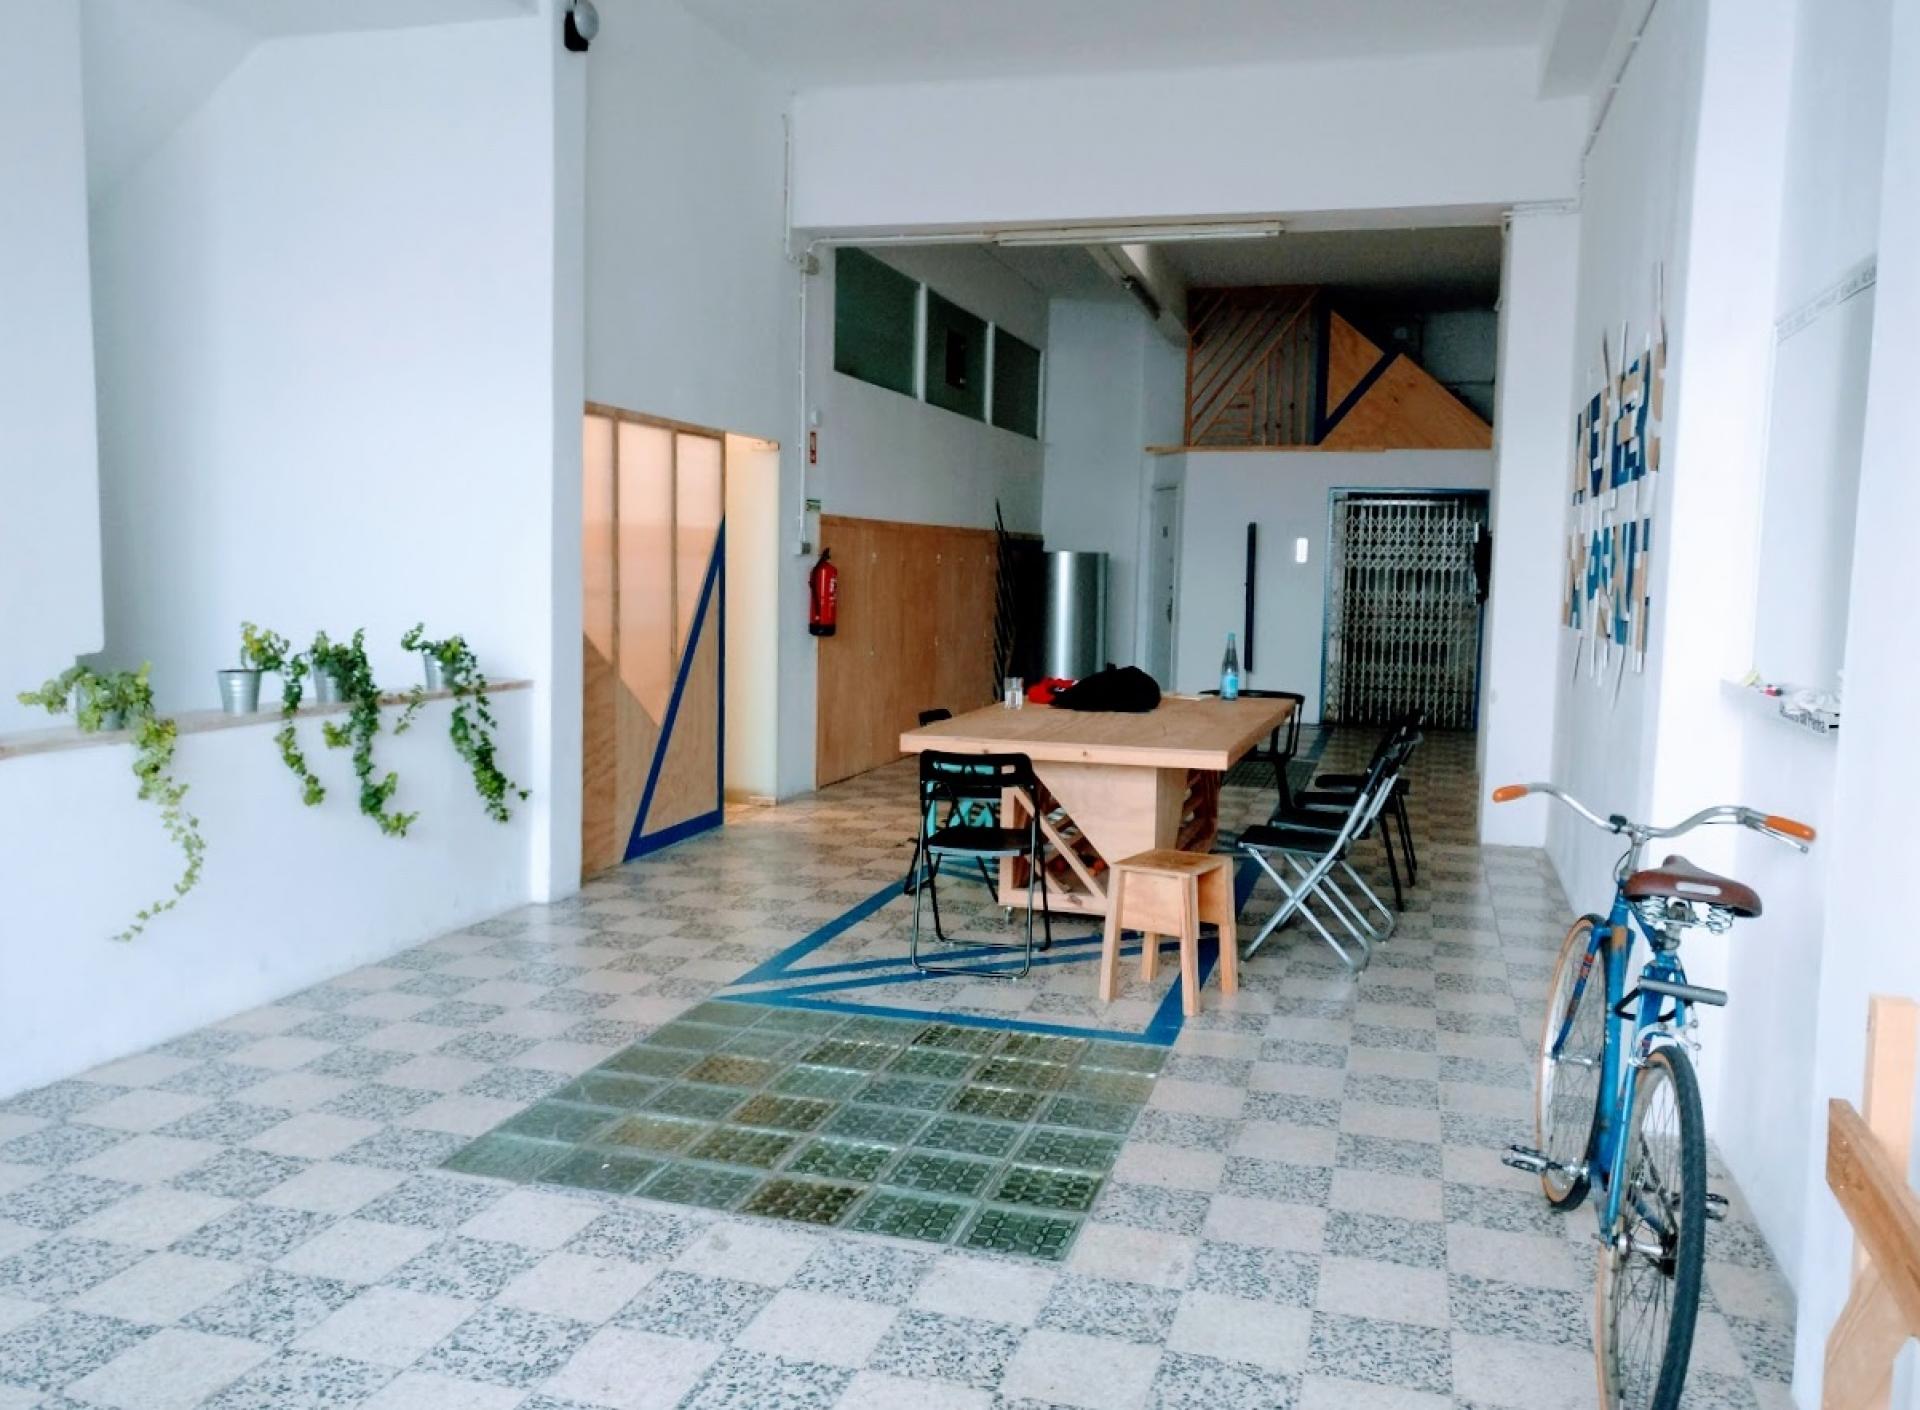 Home of Colectivo Warehouse: Ateliers da Penha. | Photo: Sonja Dragovic